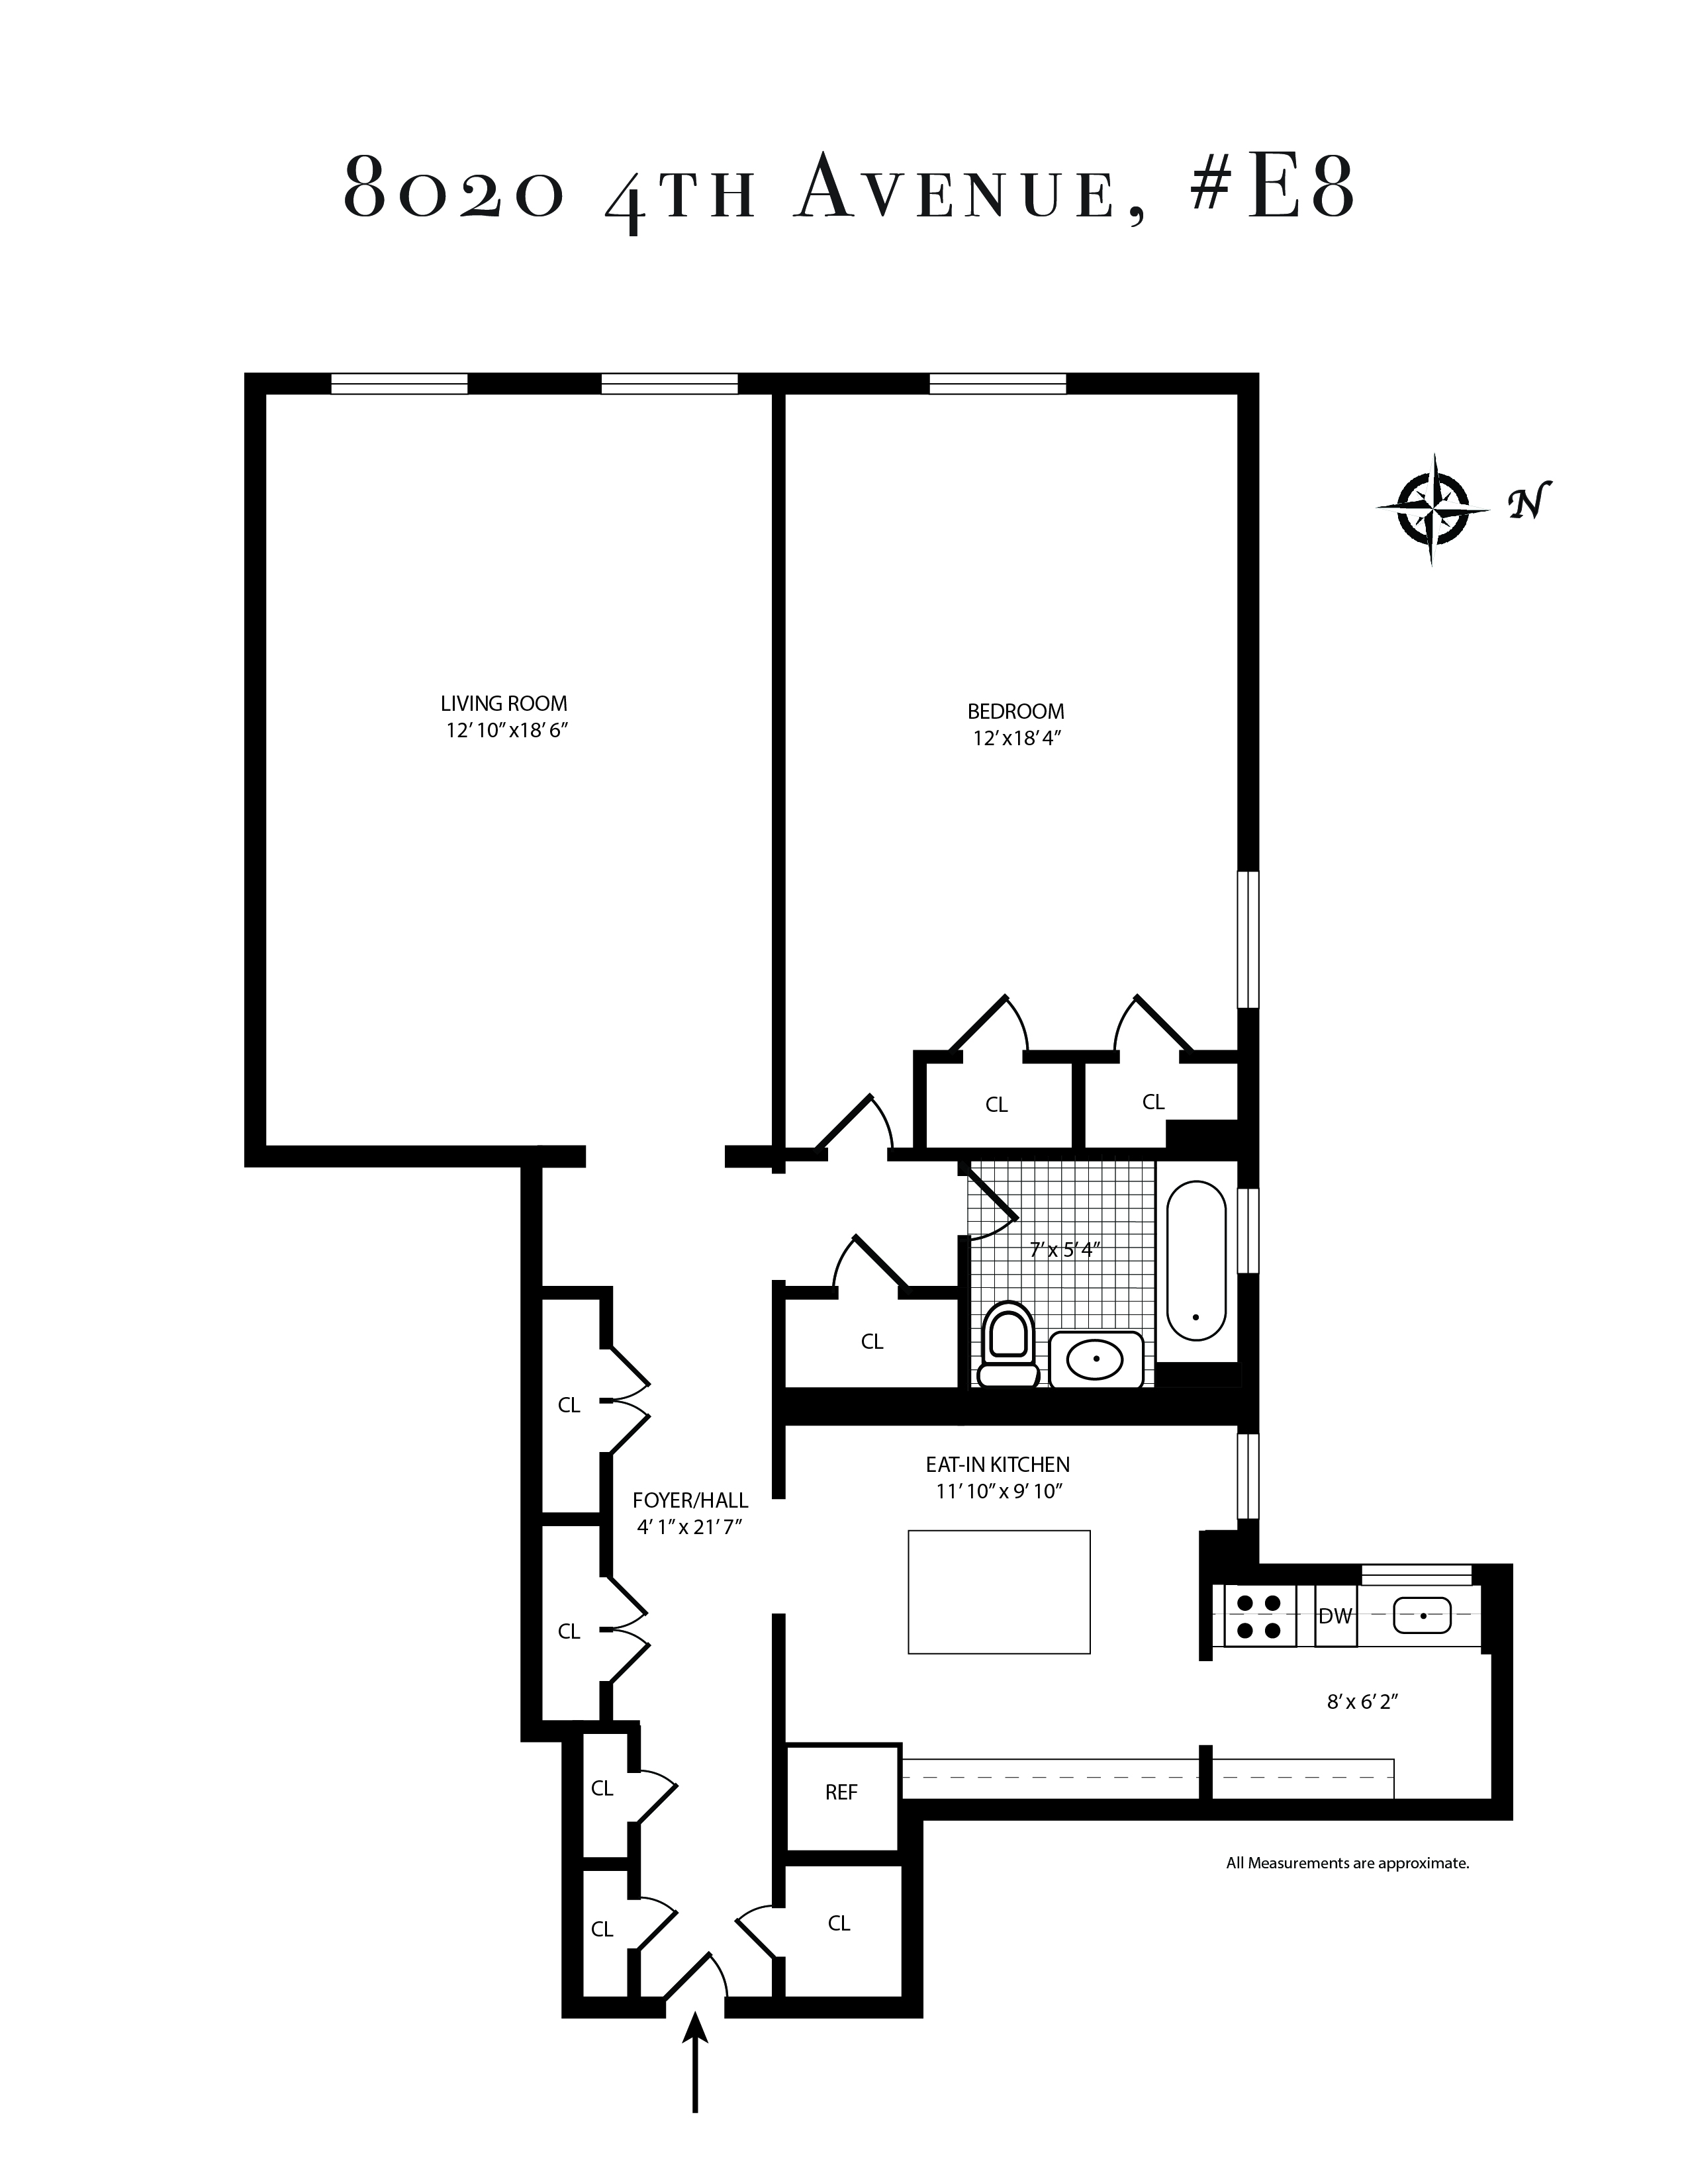 Floorplan of 8020 4th Ave